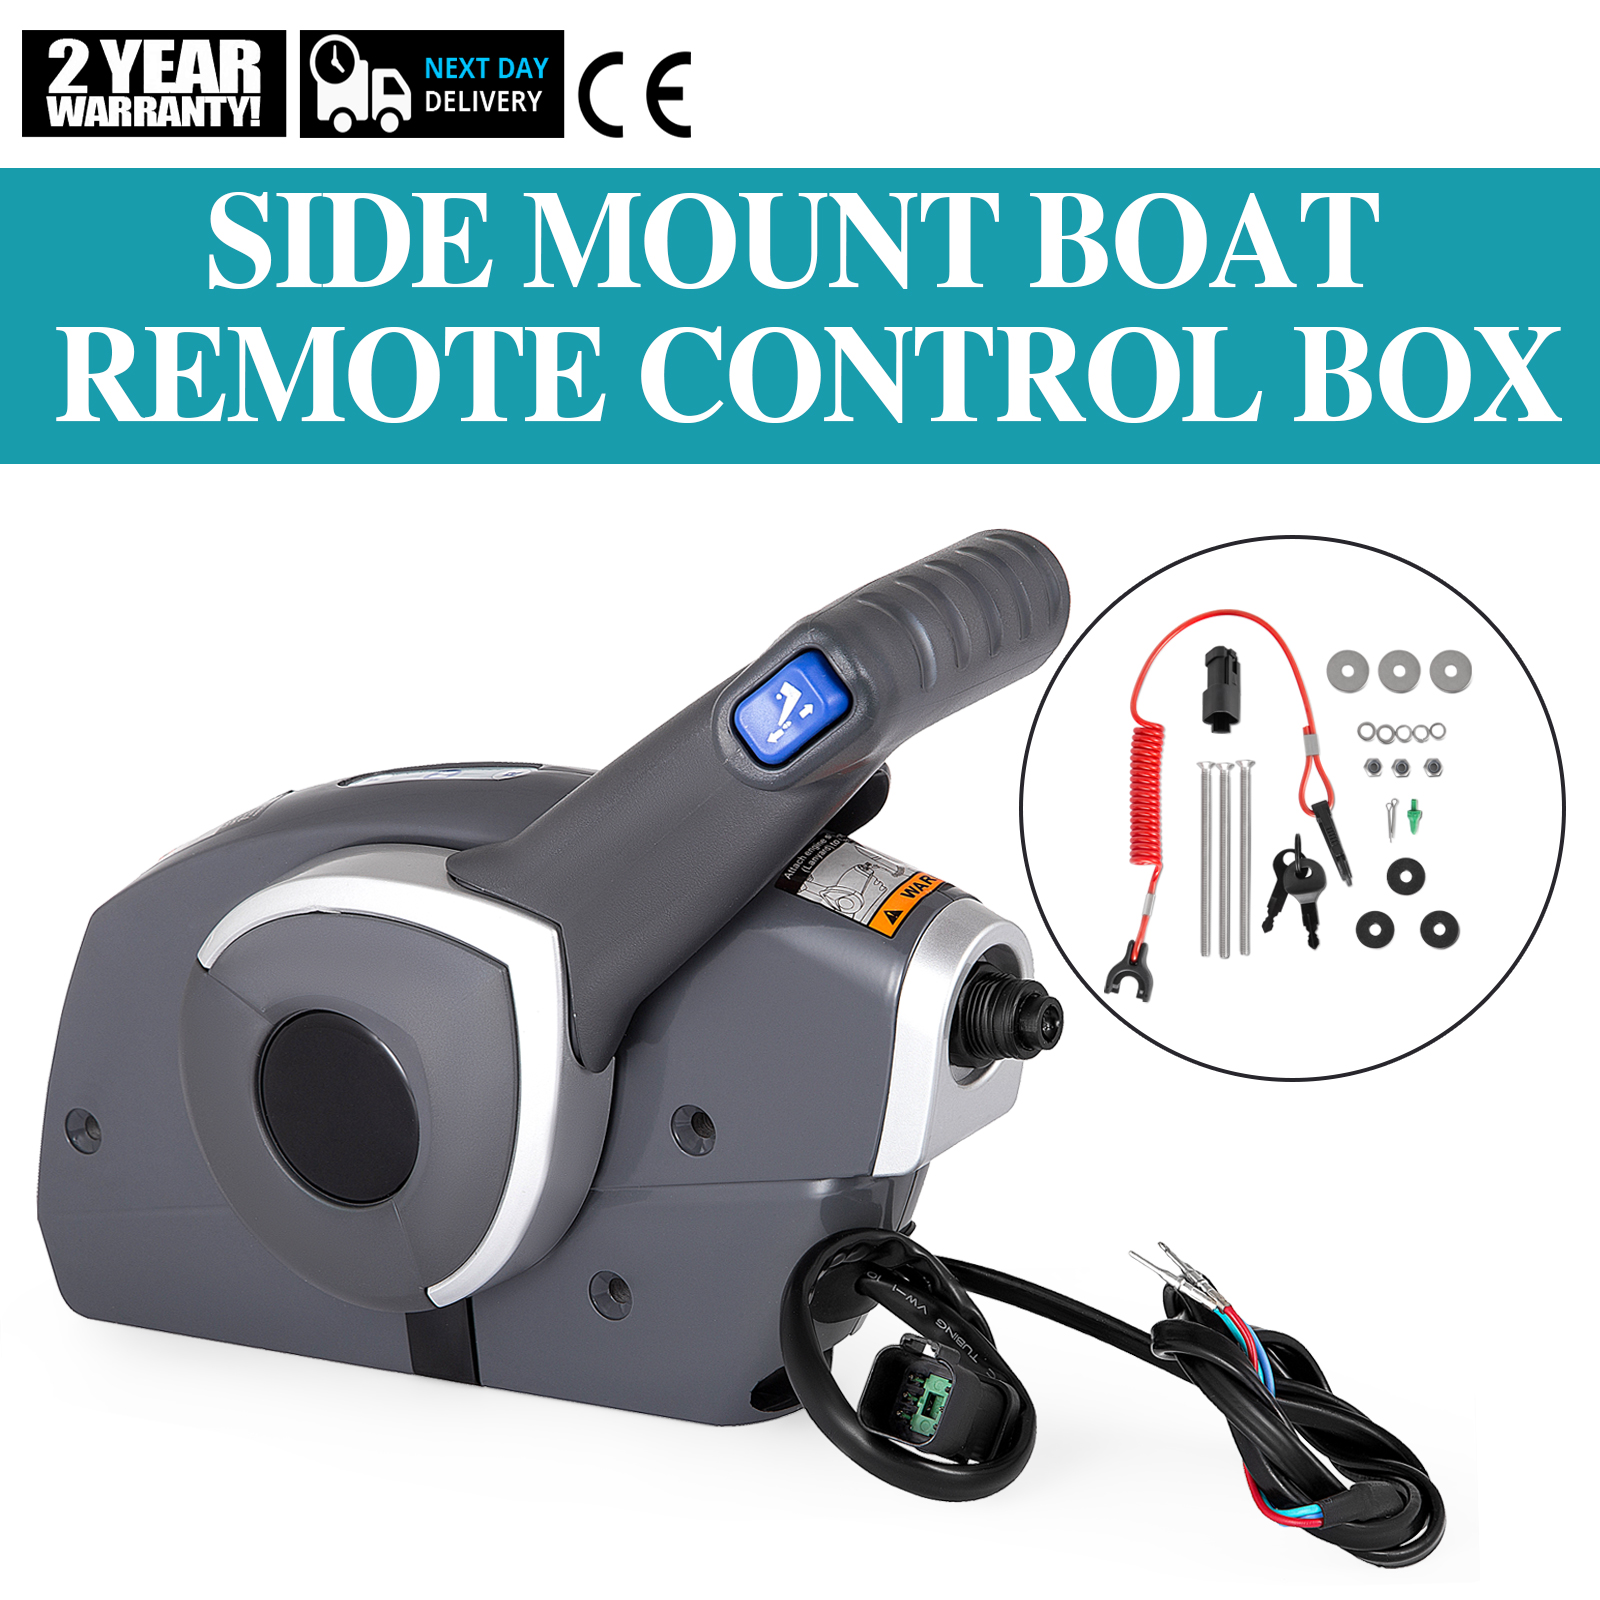 Sale Motor Outboard Remote Control Box Throttle /&Shift For BRP Johnson Evinrude